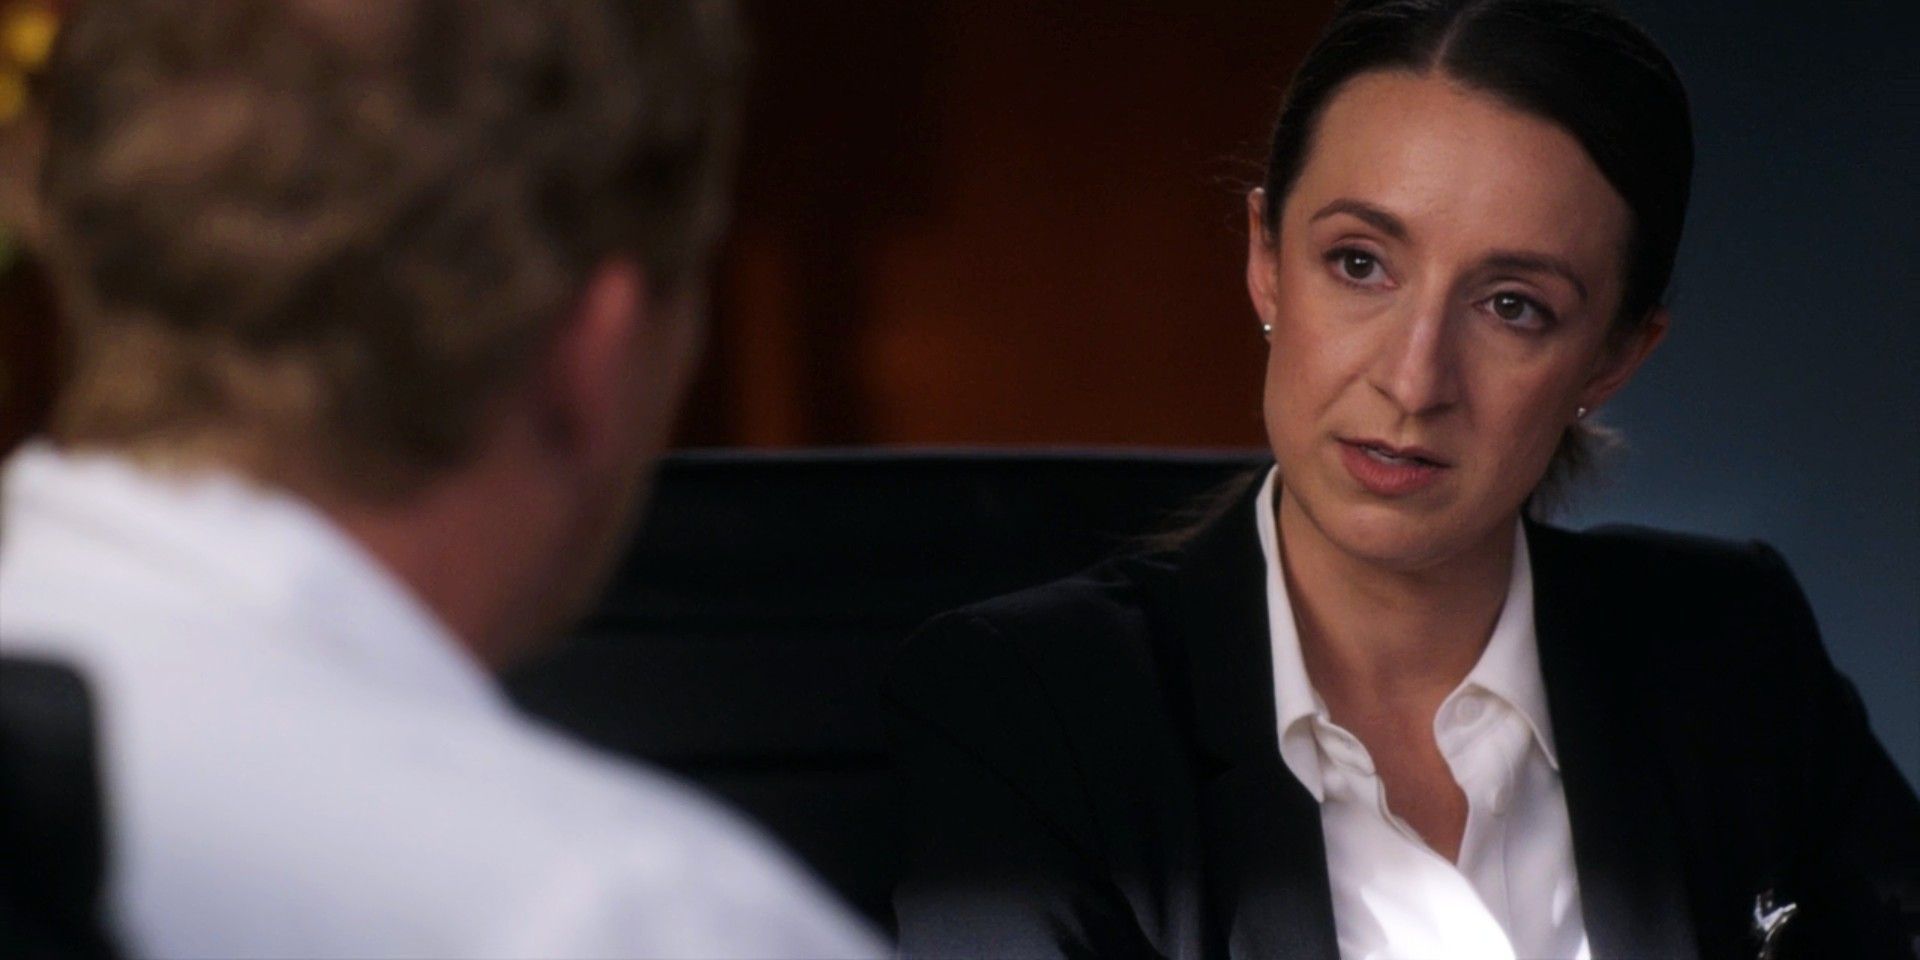 Grey's Anatomy Season 18 Episode 14 Medical Accreditation Council